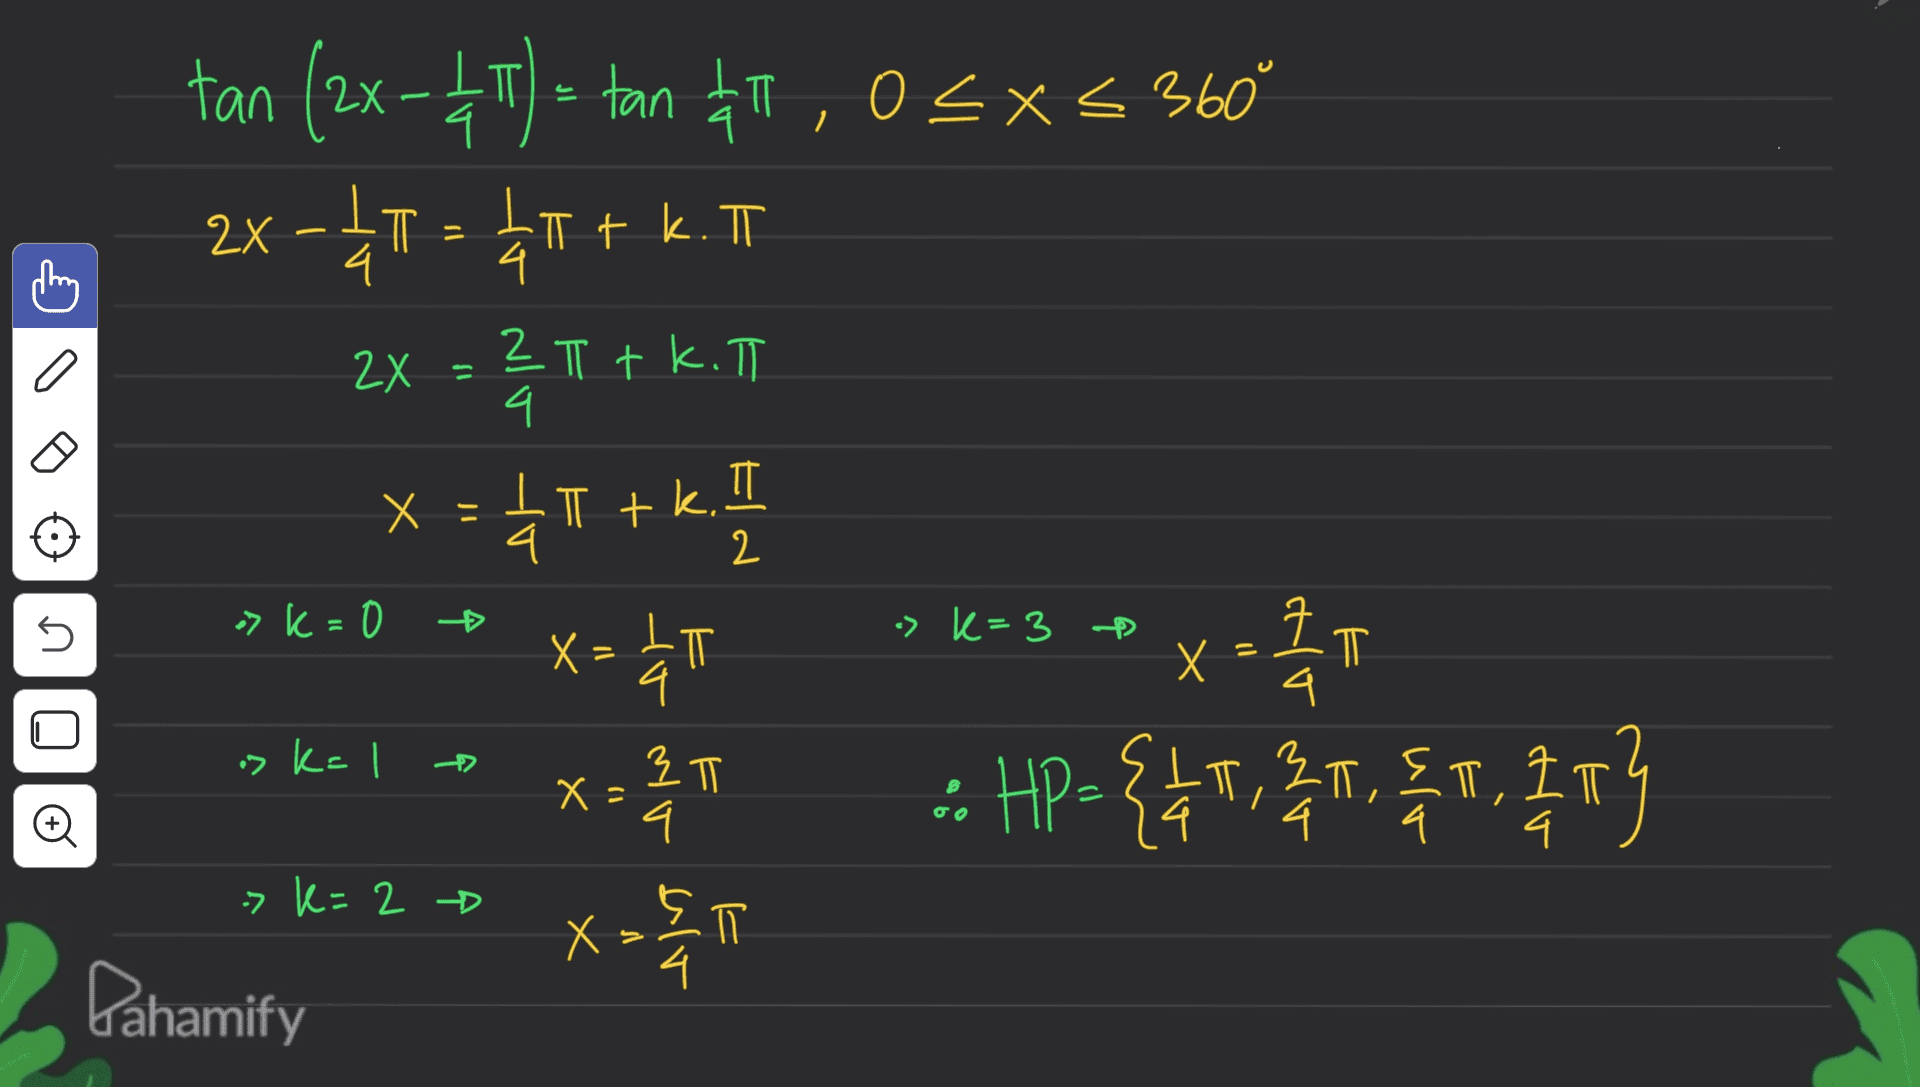 tan (2x - 2 1) = tan II , OSX 360 2x -4T = 1+ k. TT 2X = ZT tk.lt q 3 Х. il IT tk. II 4 2 5 > k=0 + -> k=3 = x X = TT q X Х 크 4 T ㅠ > kal 3 T X Х :: HP-{{1,2,3,43 - An Đ q -> k=2 X = 2 T SA Pahamify 